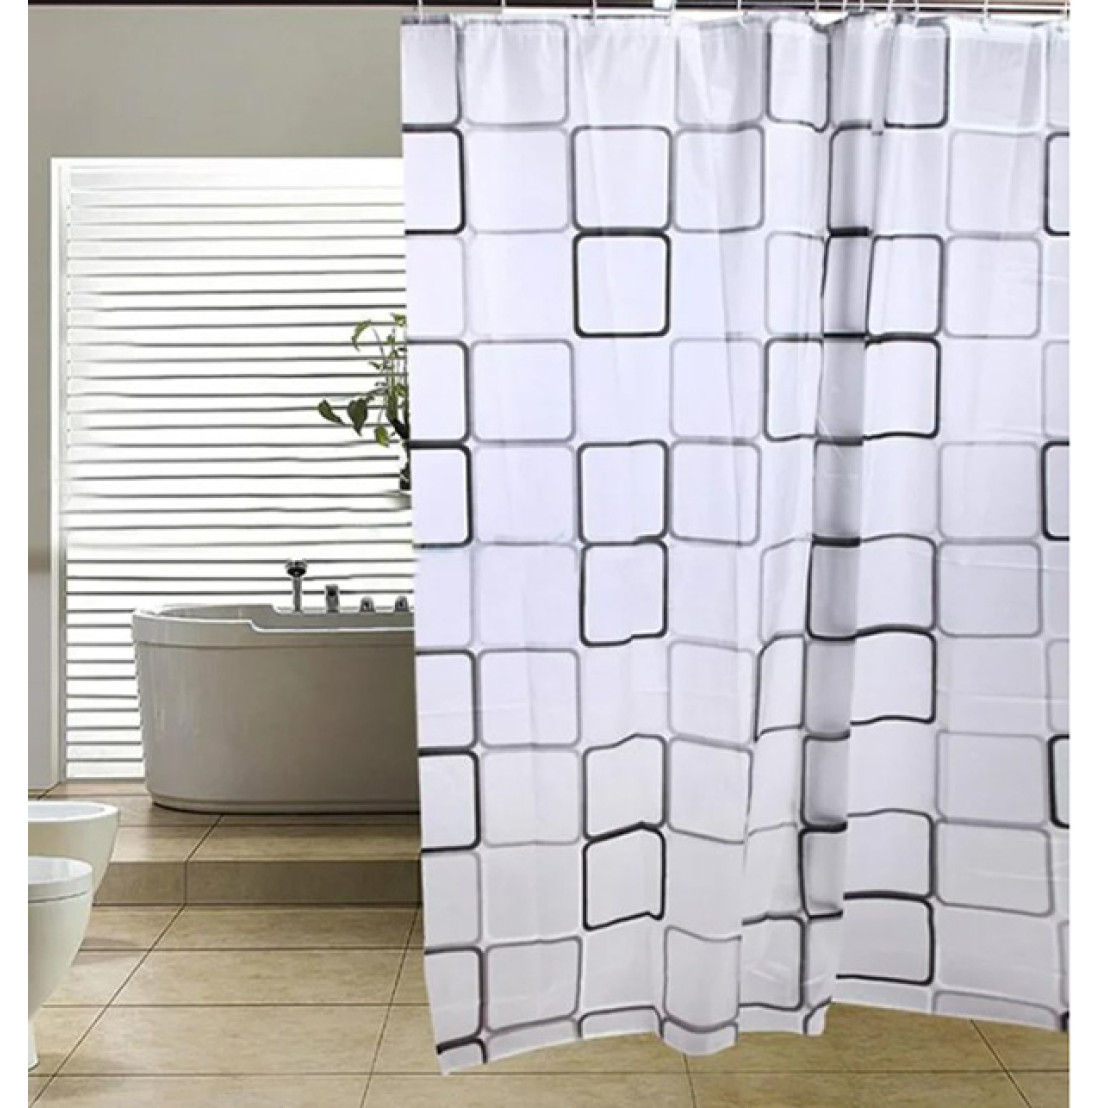 Shower Curtain шторы для ванной 180x180 см ONLYSUN 1 PC. Штора для ванной комнаты «Shower Curtain» 3d Париж. Shower Curtain шторы для ванной 180x180 см Polyester. Штора для ванной Meiwa Krackle. Прозрачные шторки на ванну хром